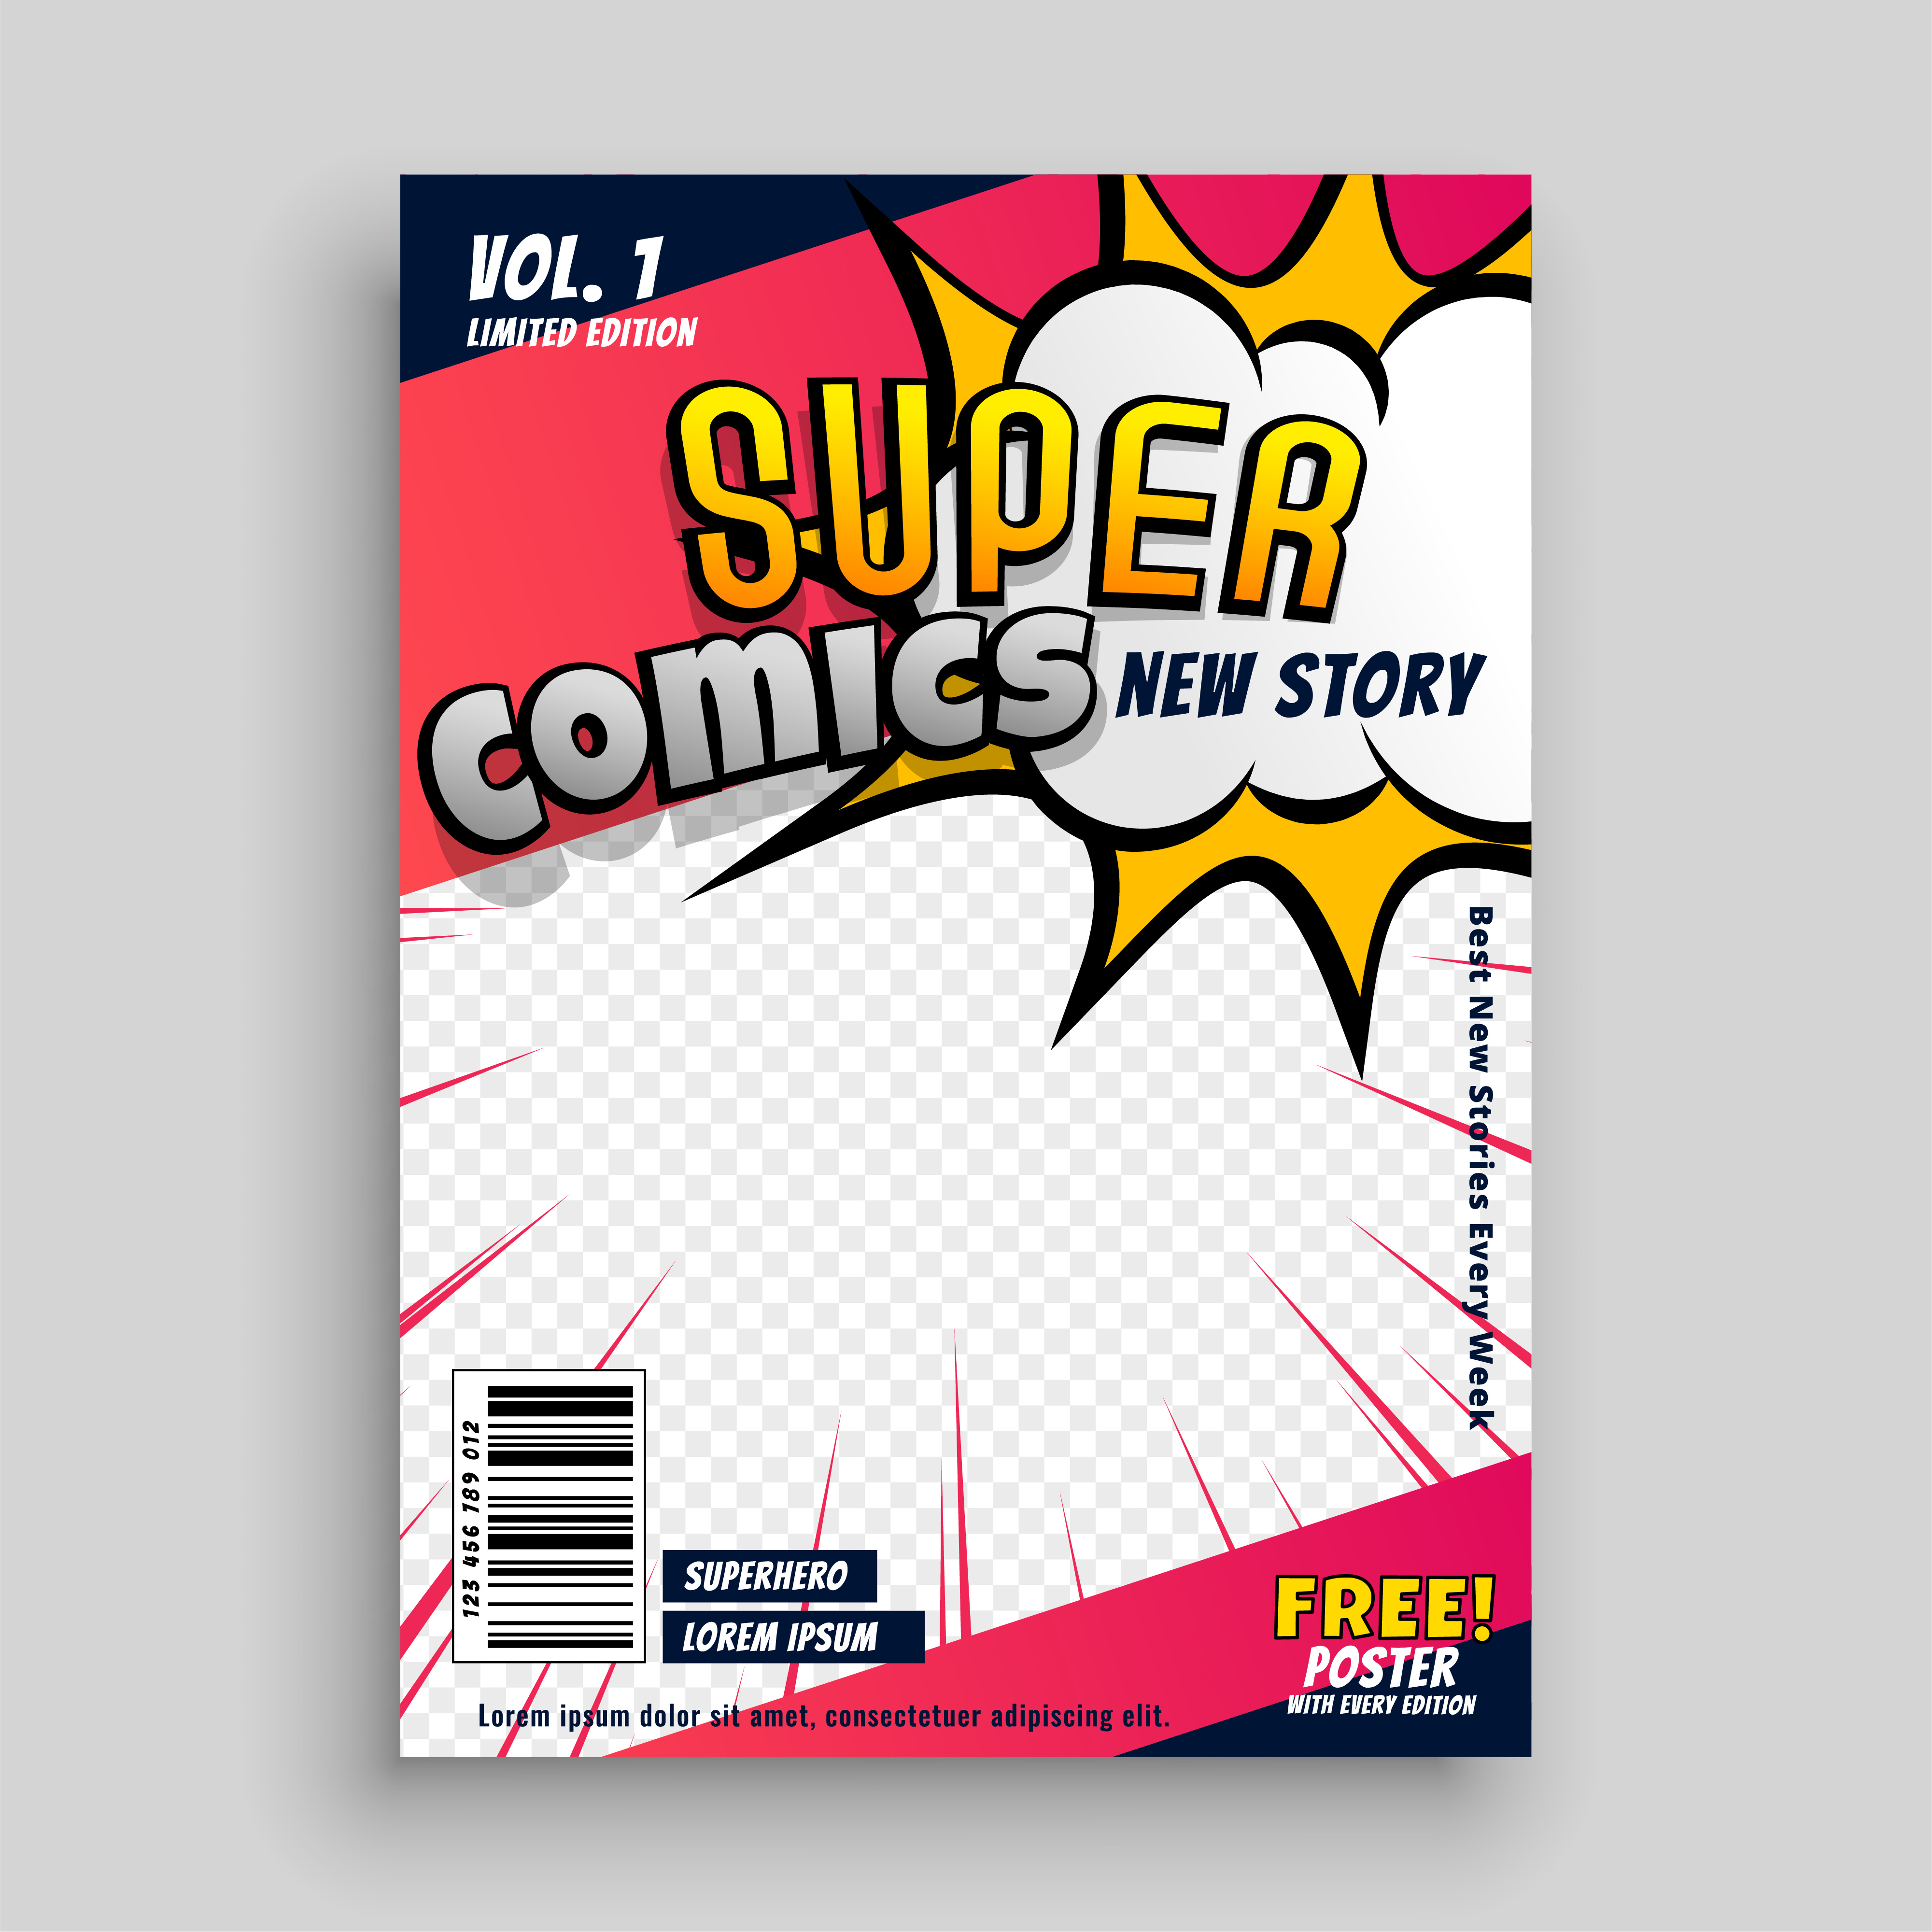 comic book cover design template Download Free Vector Art, Stock